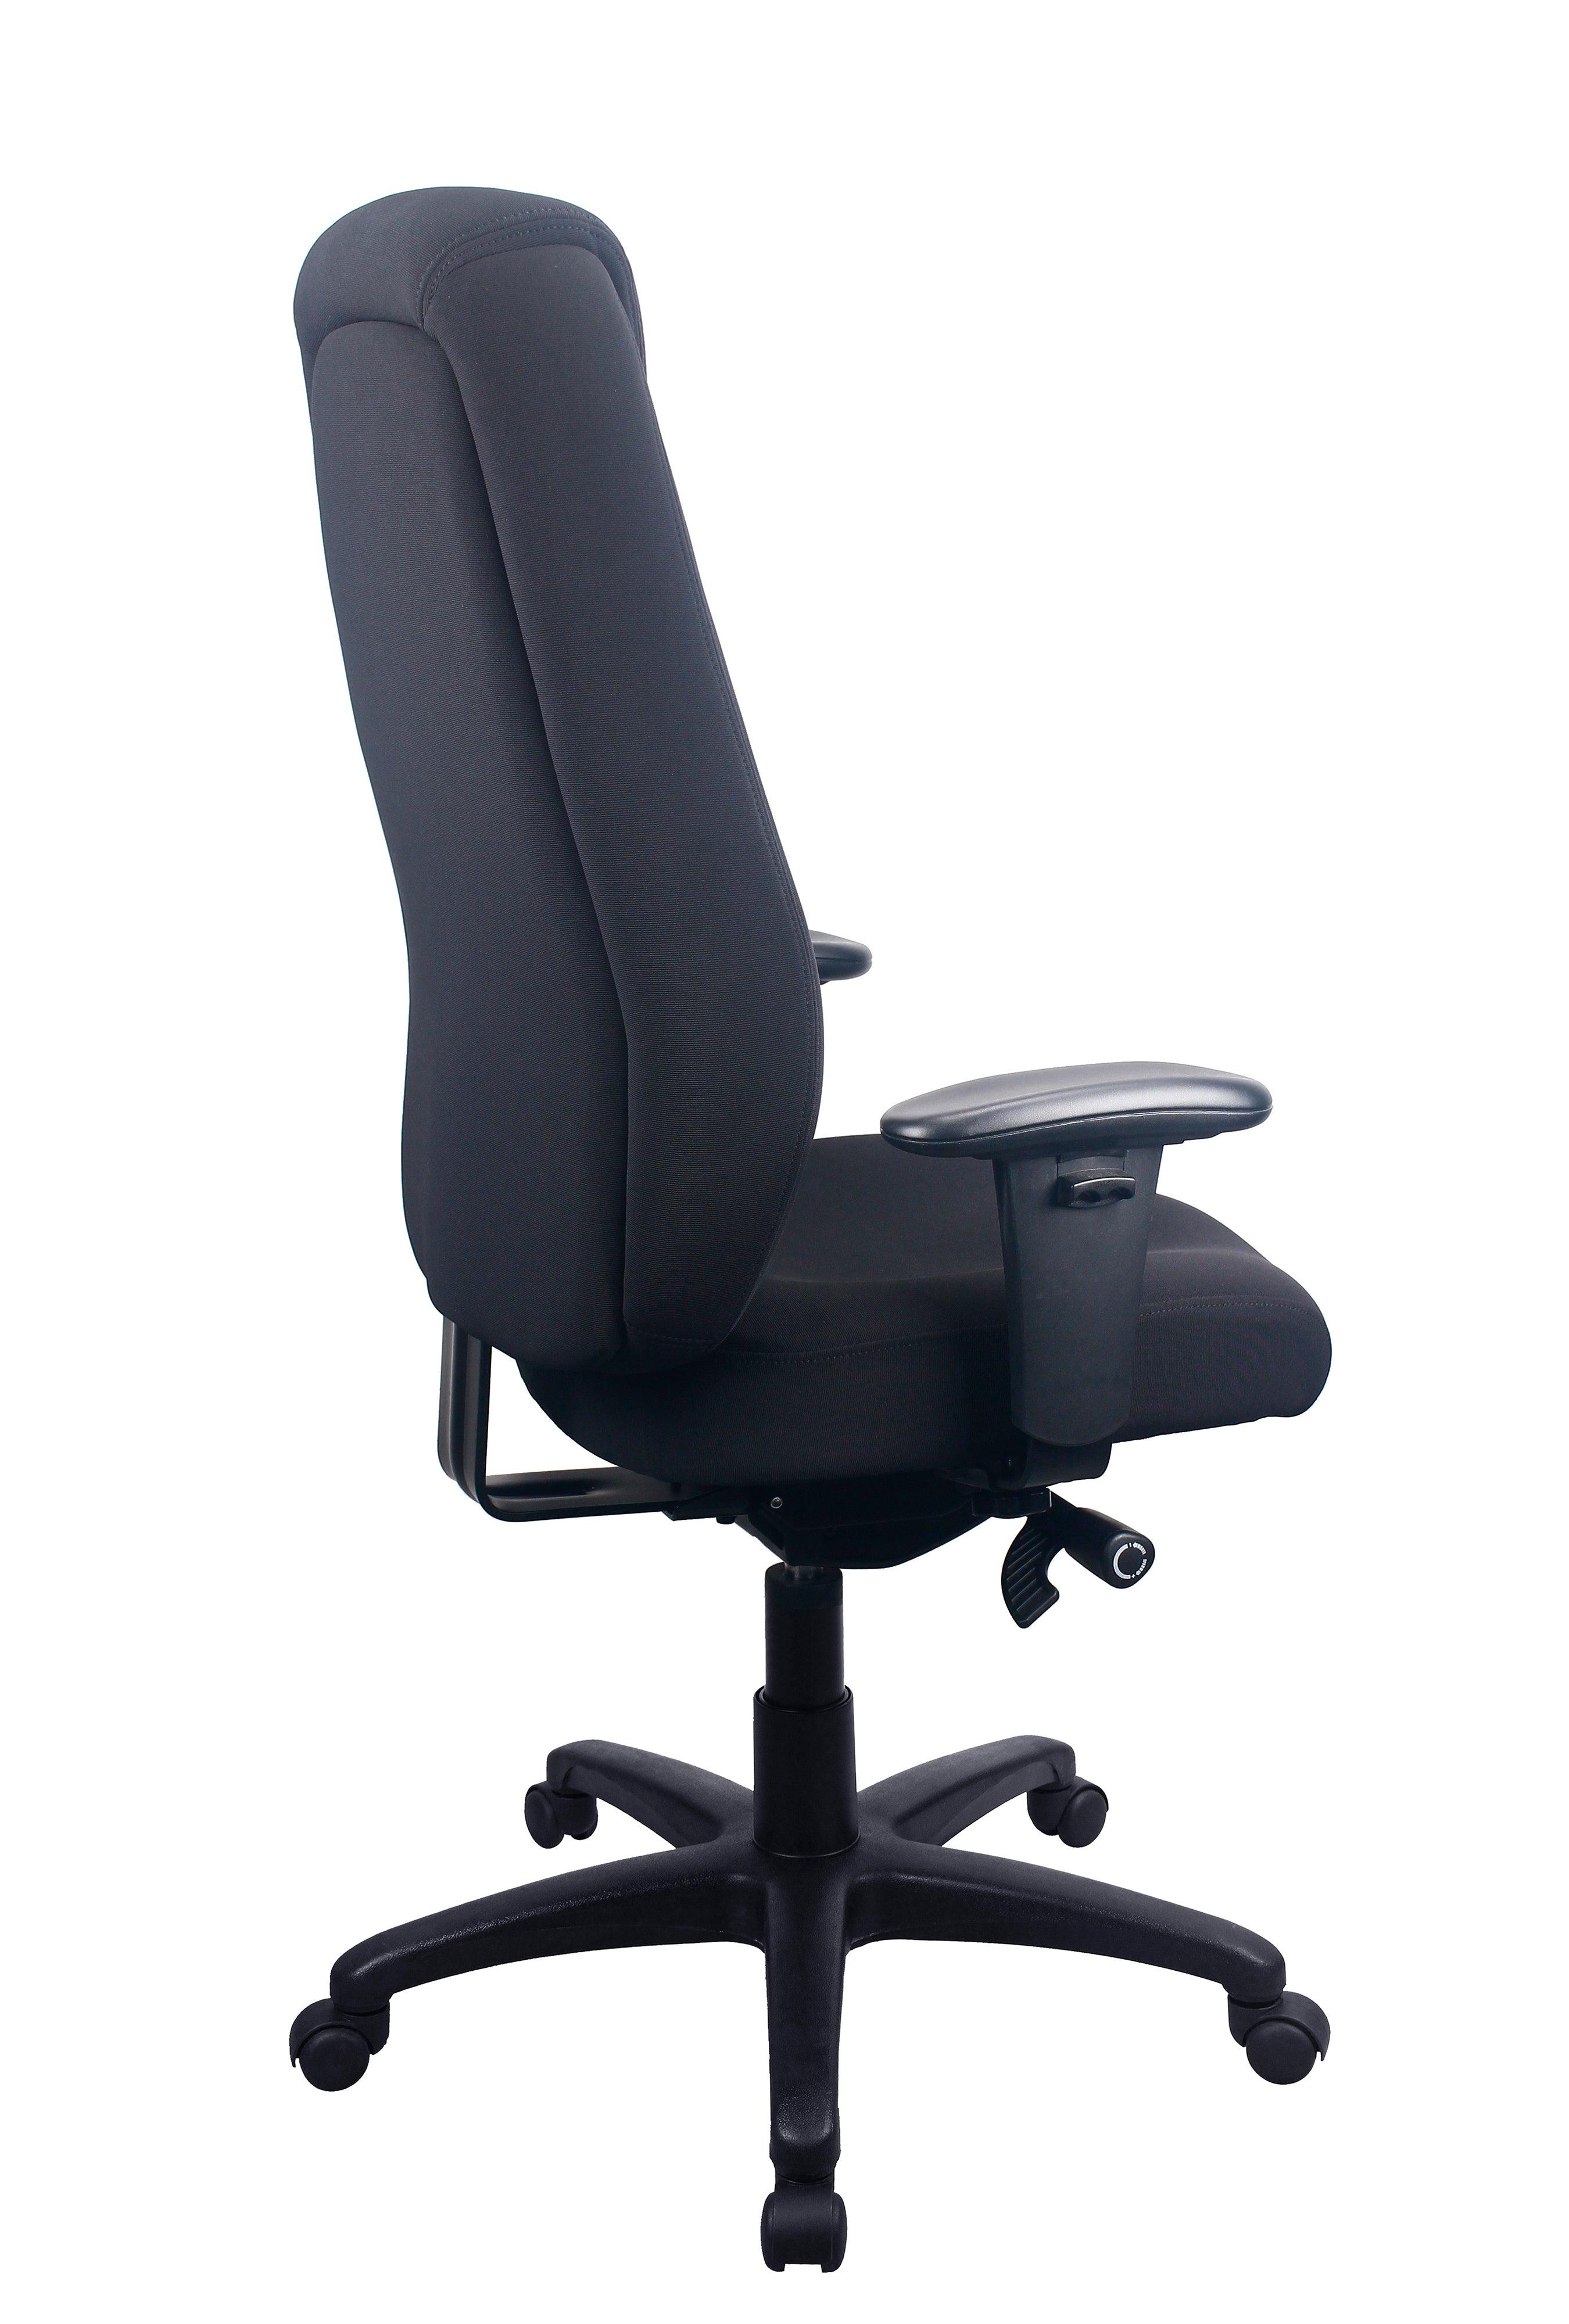 TEMPUR®-6400 Lumbar Support™ Chair: Where Design Meets Relaxation - Layton Health